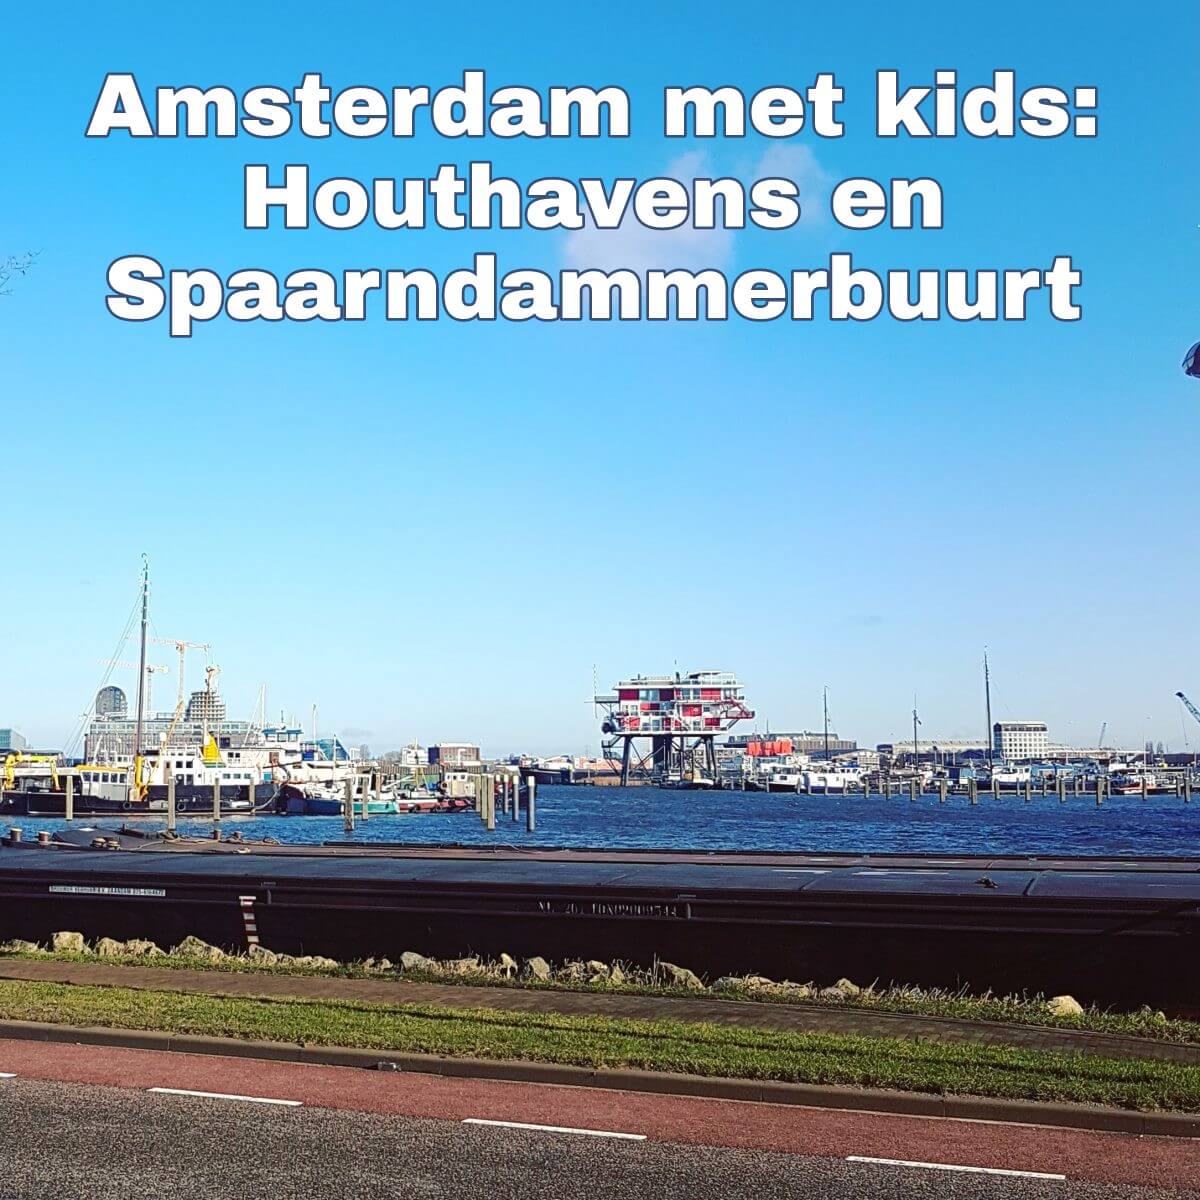 Amsterdam West met kinderen, De Houthavens en Spaarndammerbuurt